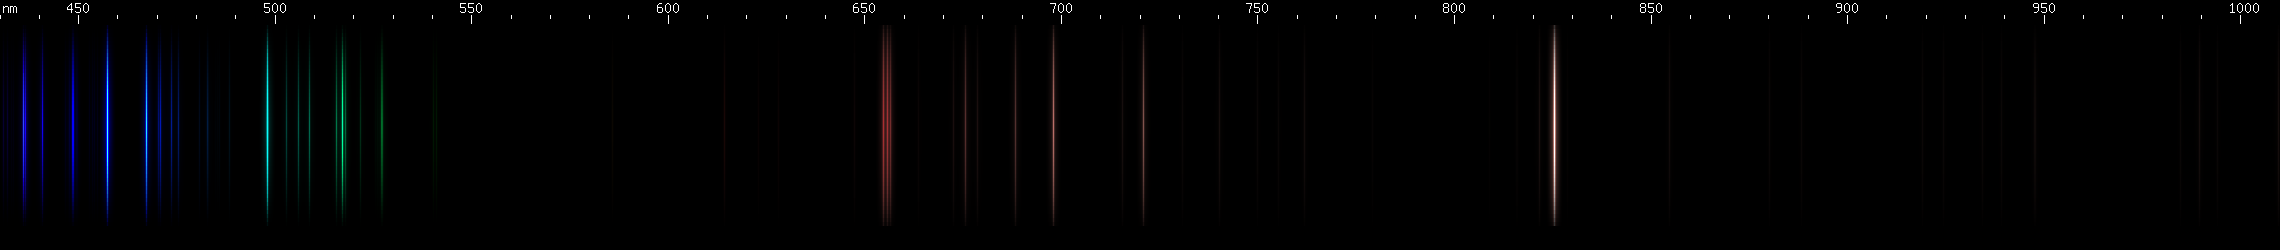 Spectral lines of Beryllium.